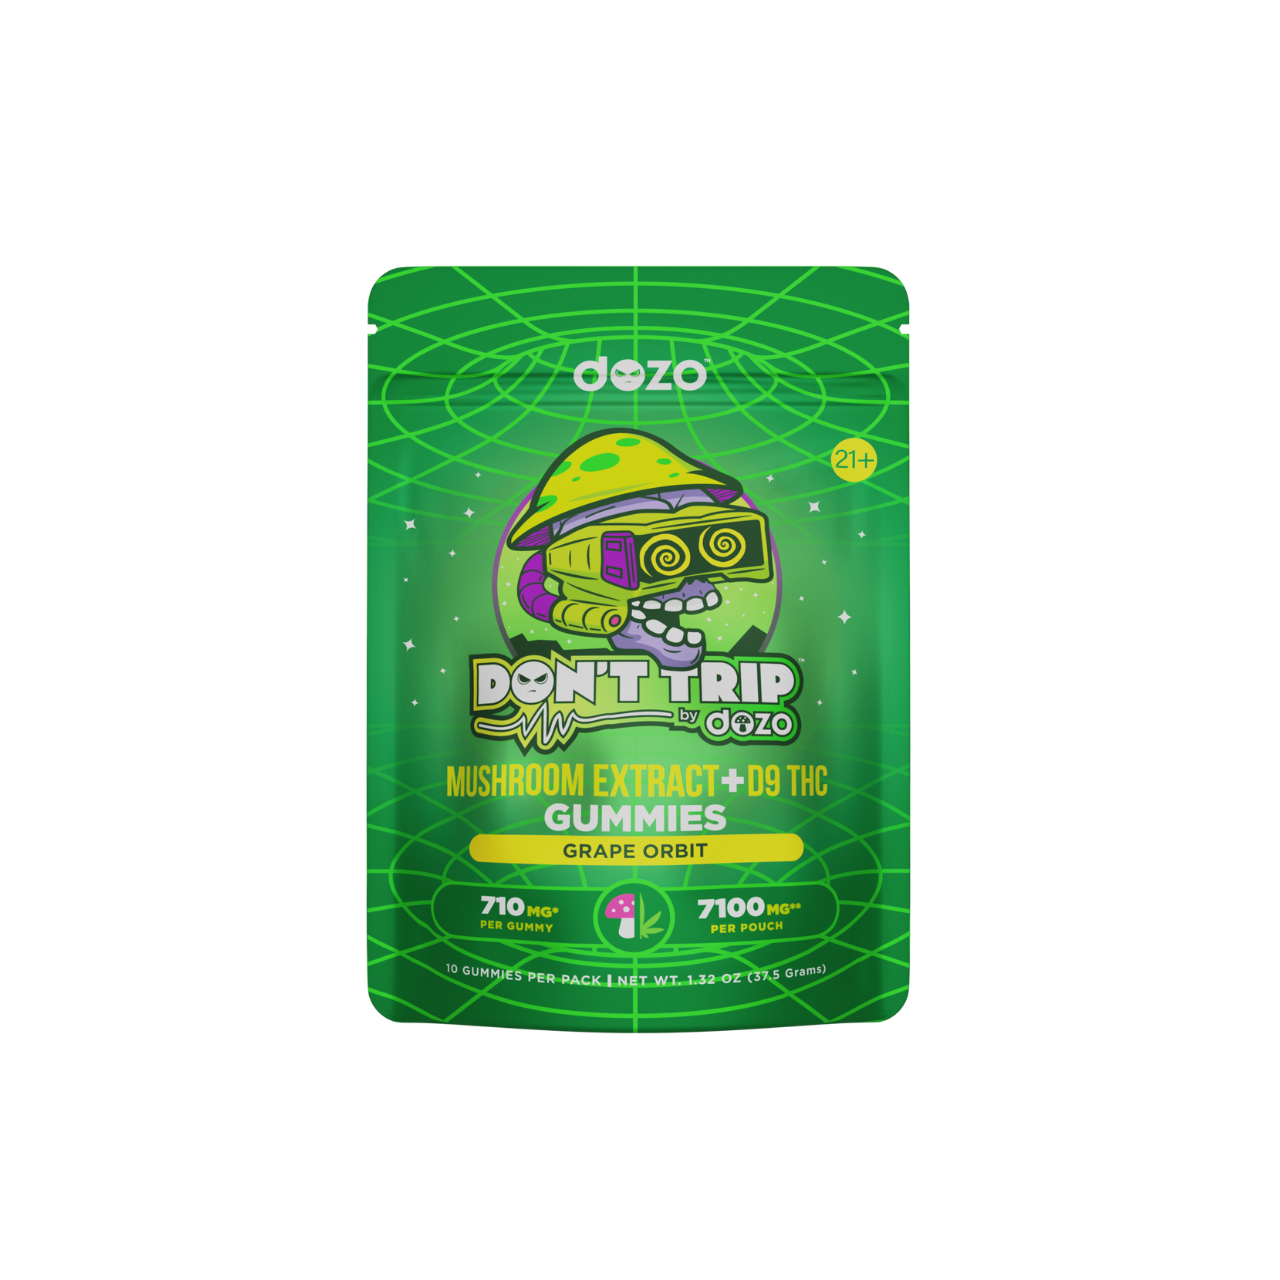 Dozo - Don't Trip Dozo (Mushroom Extract + D9 THC) - Gummies & Edibles (7100mg x 10) - MK Distro